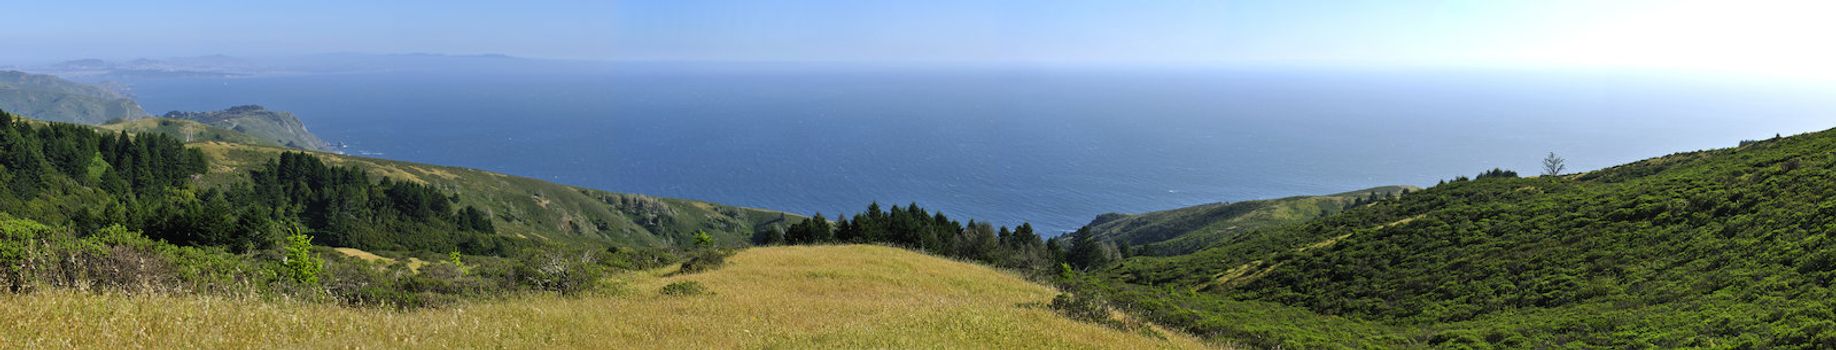 Panoramic view of Pacific Ocean from Muir Woods in California